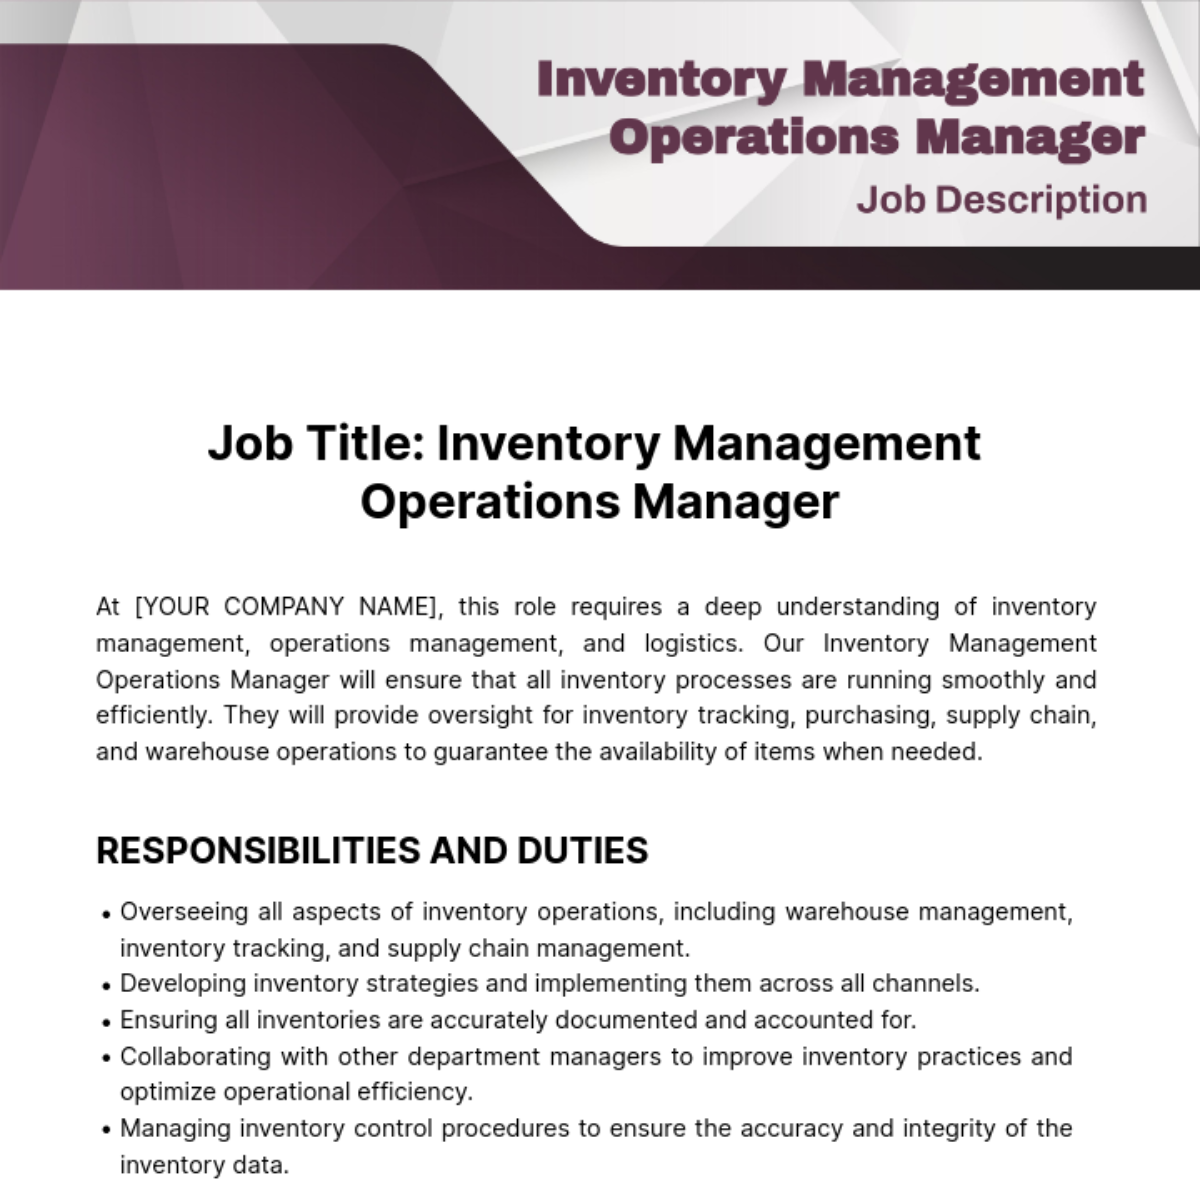 Inventory Management Operations Manager Job Description Template